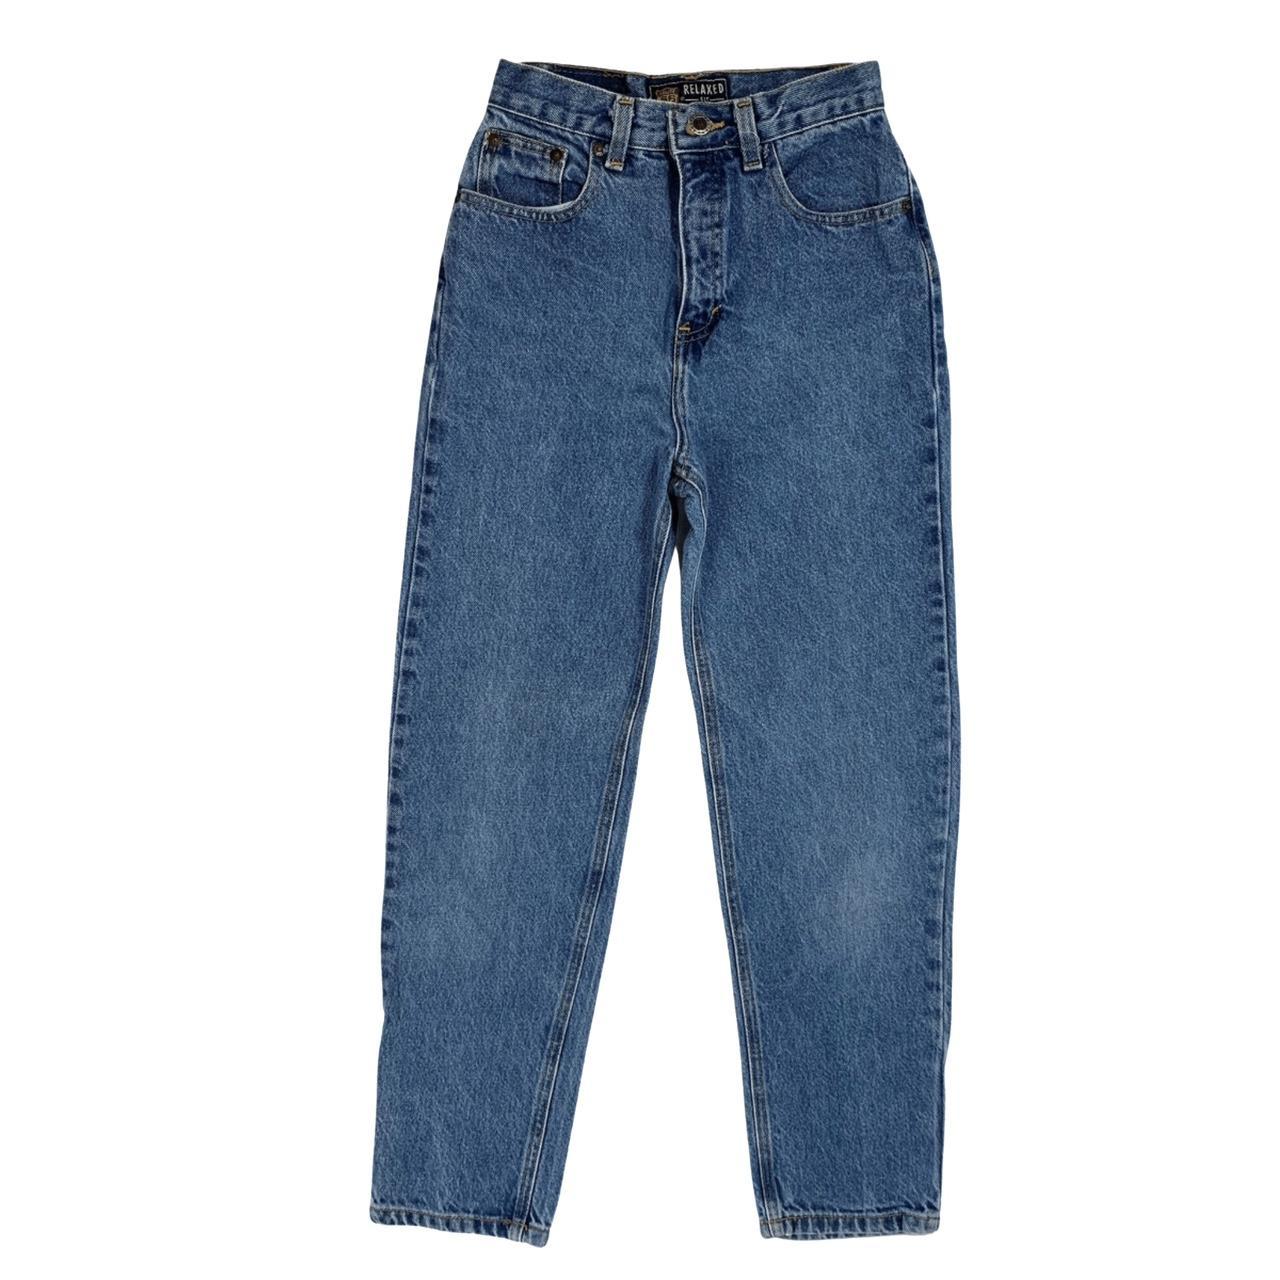 High waisted denim jeans 🫐 The perfect high waisted... - Depop